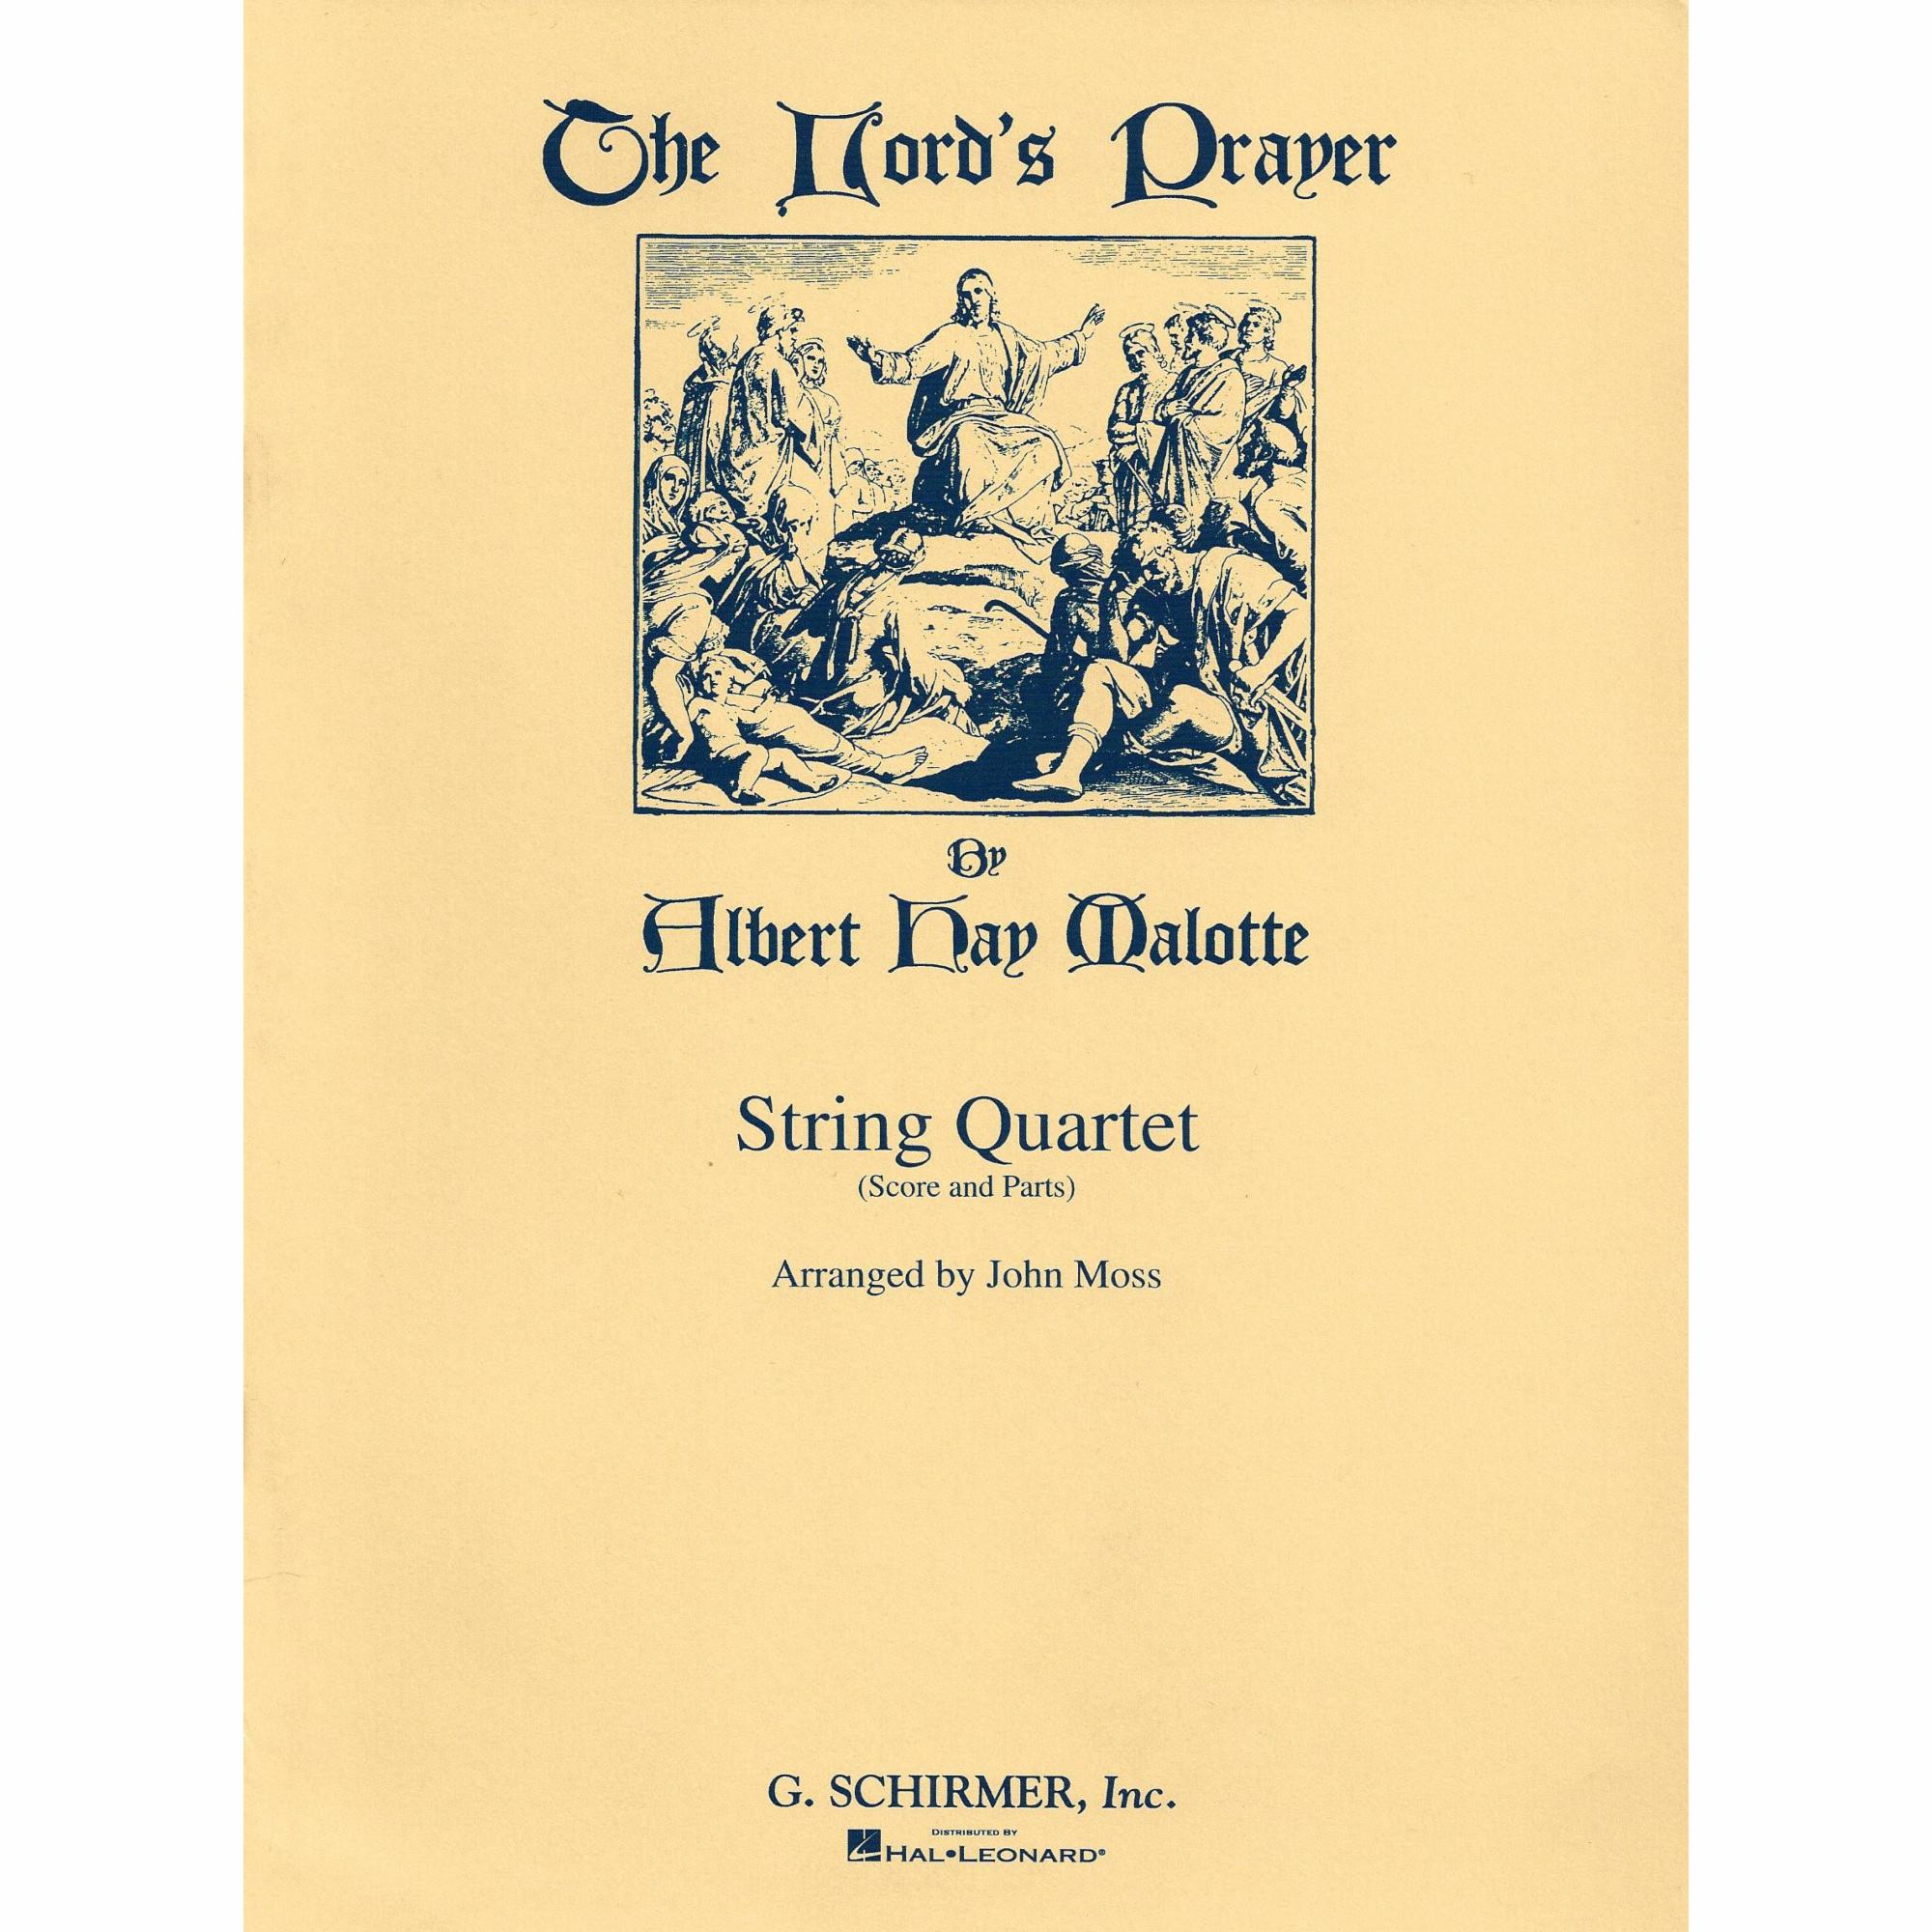 The Lord's Prayer for String Quartet